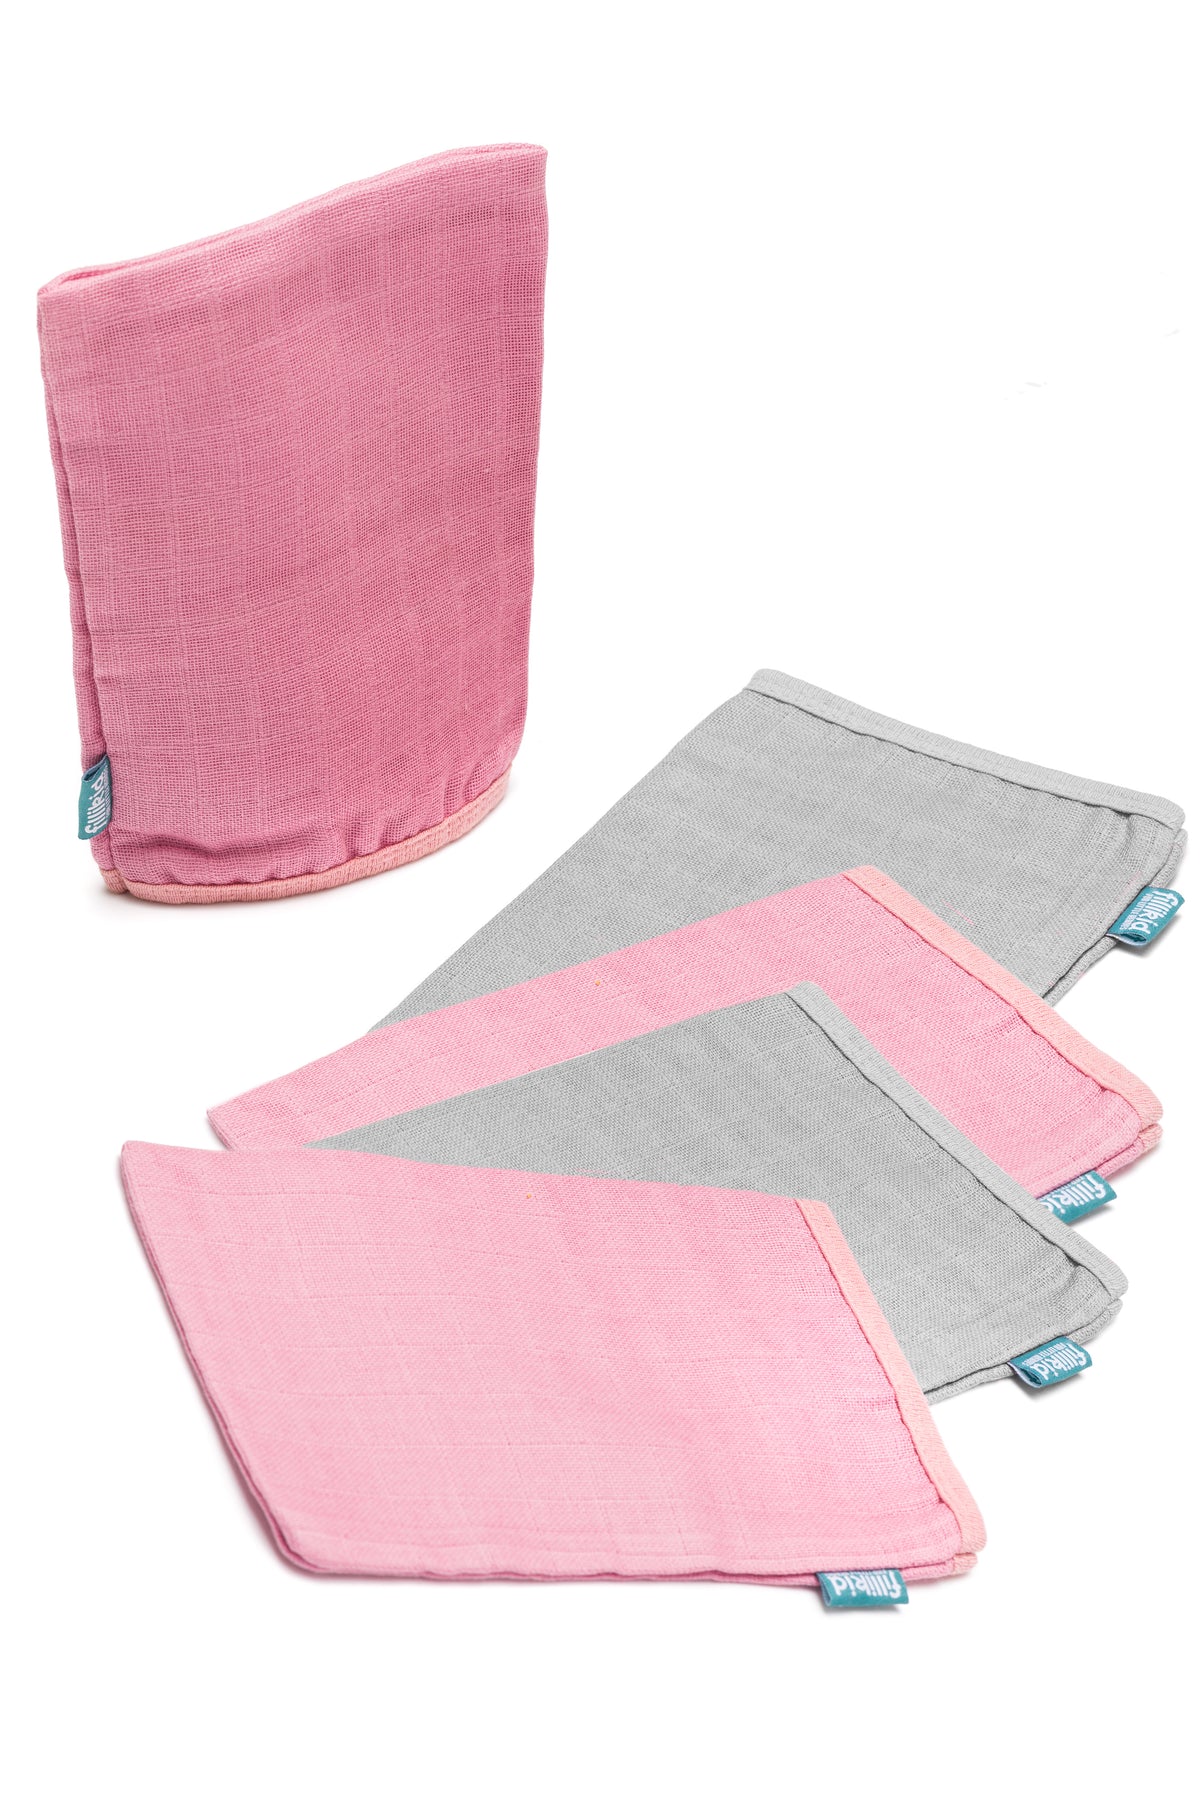 Fillikid Waschhandschuh Mull 5er Pack rosa/grau